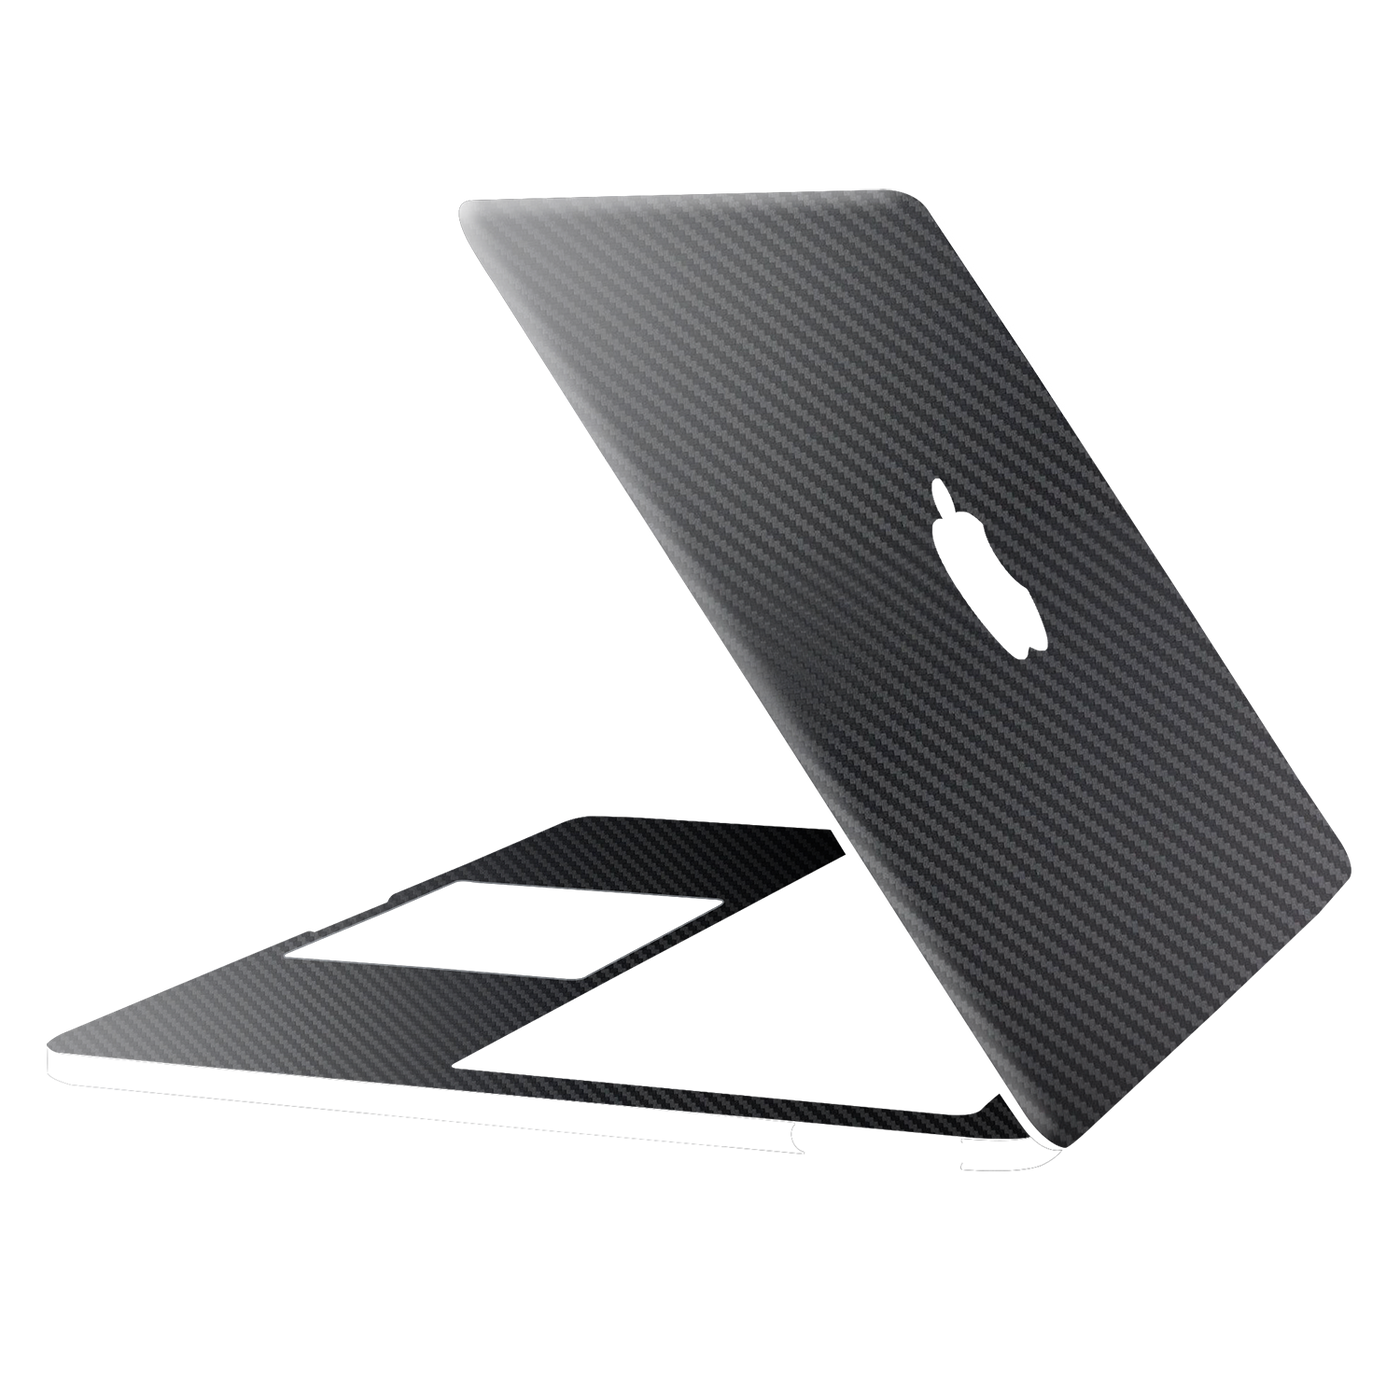 15 inch macbook pro skins